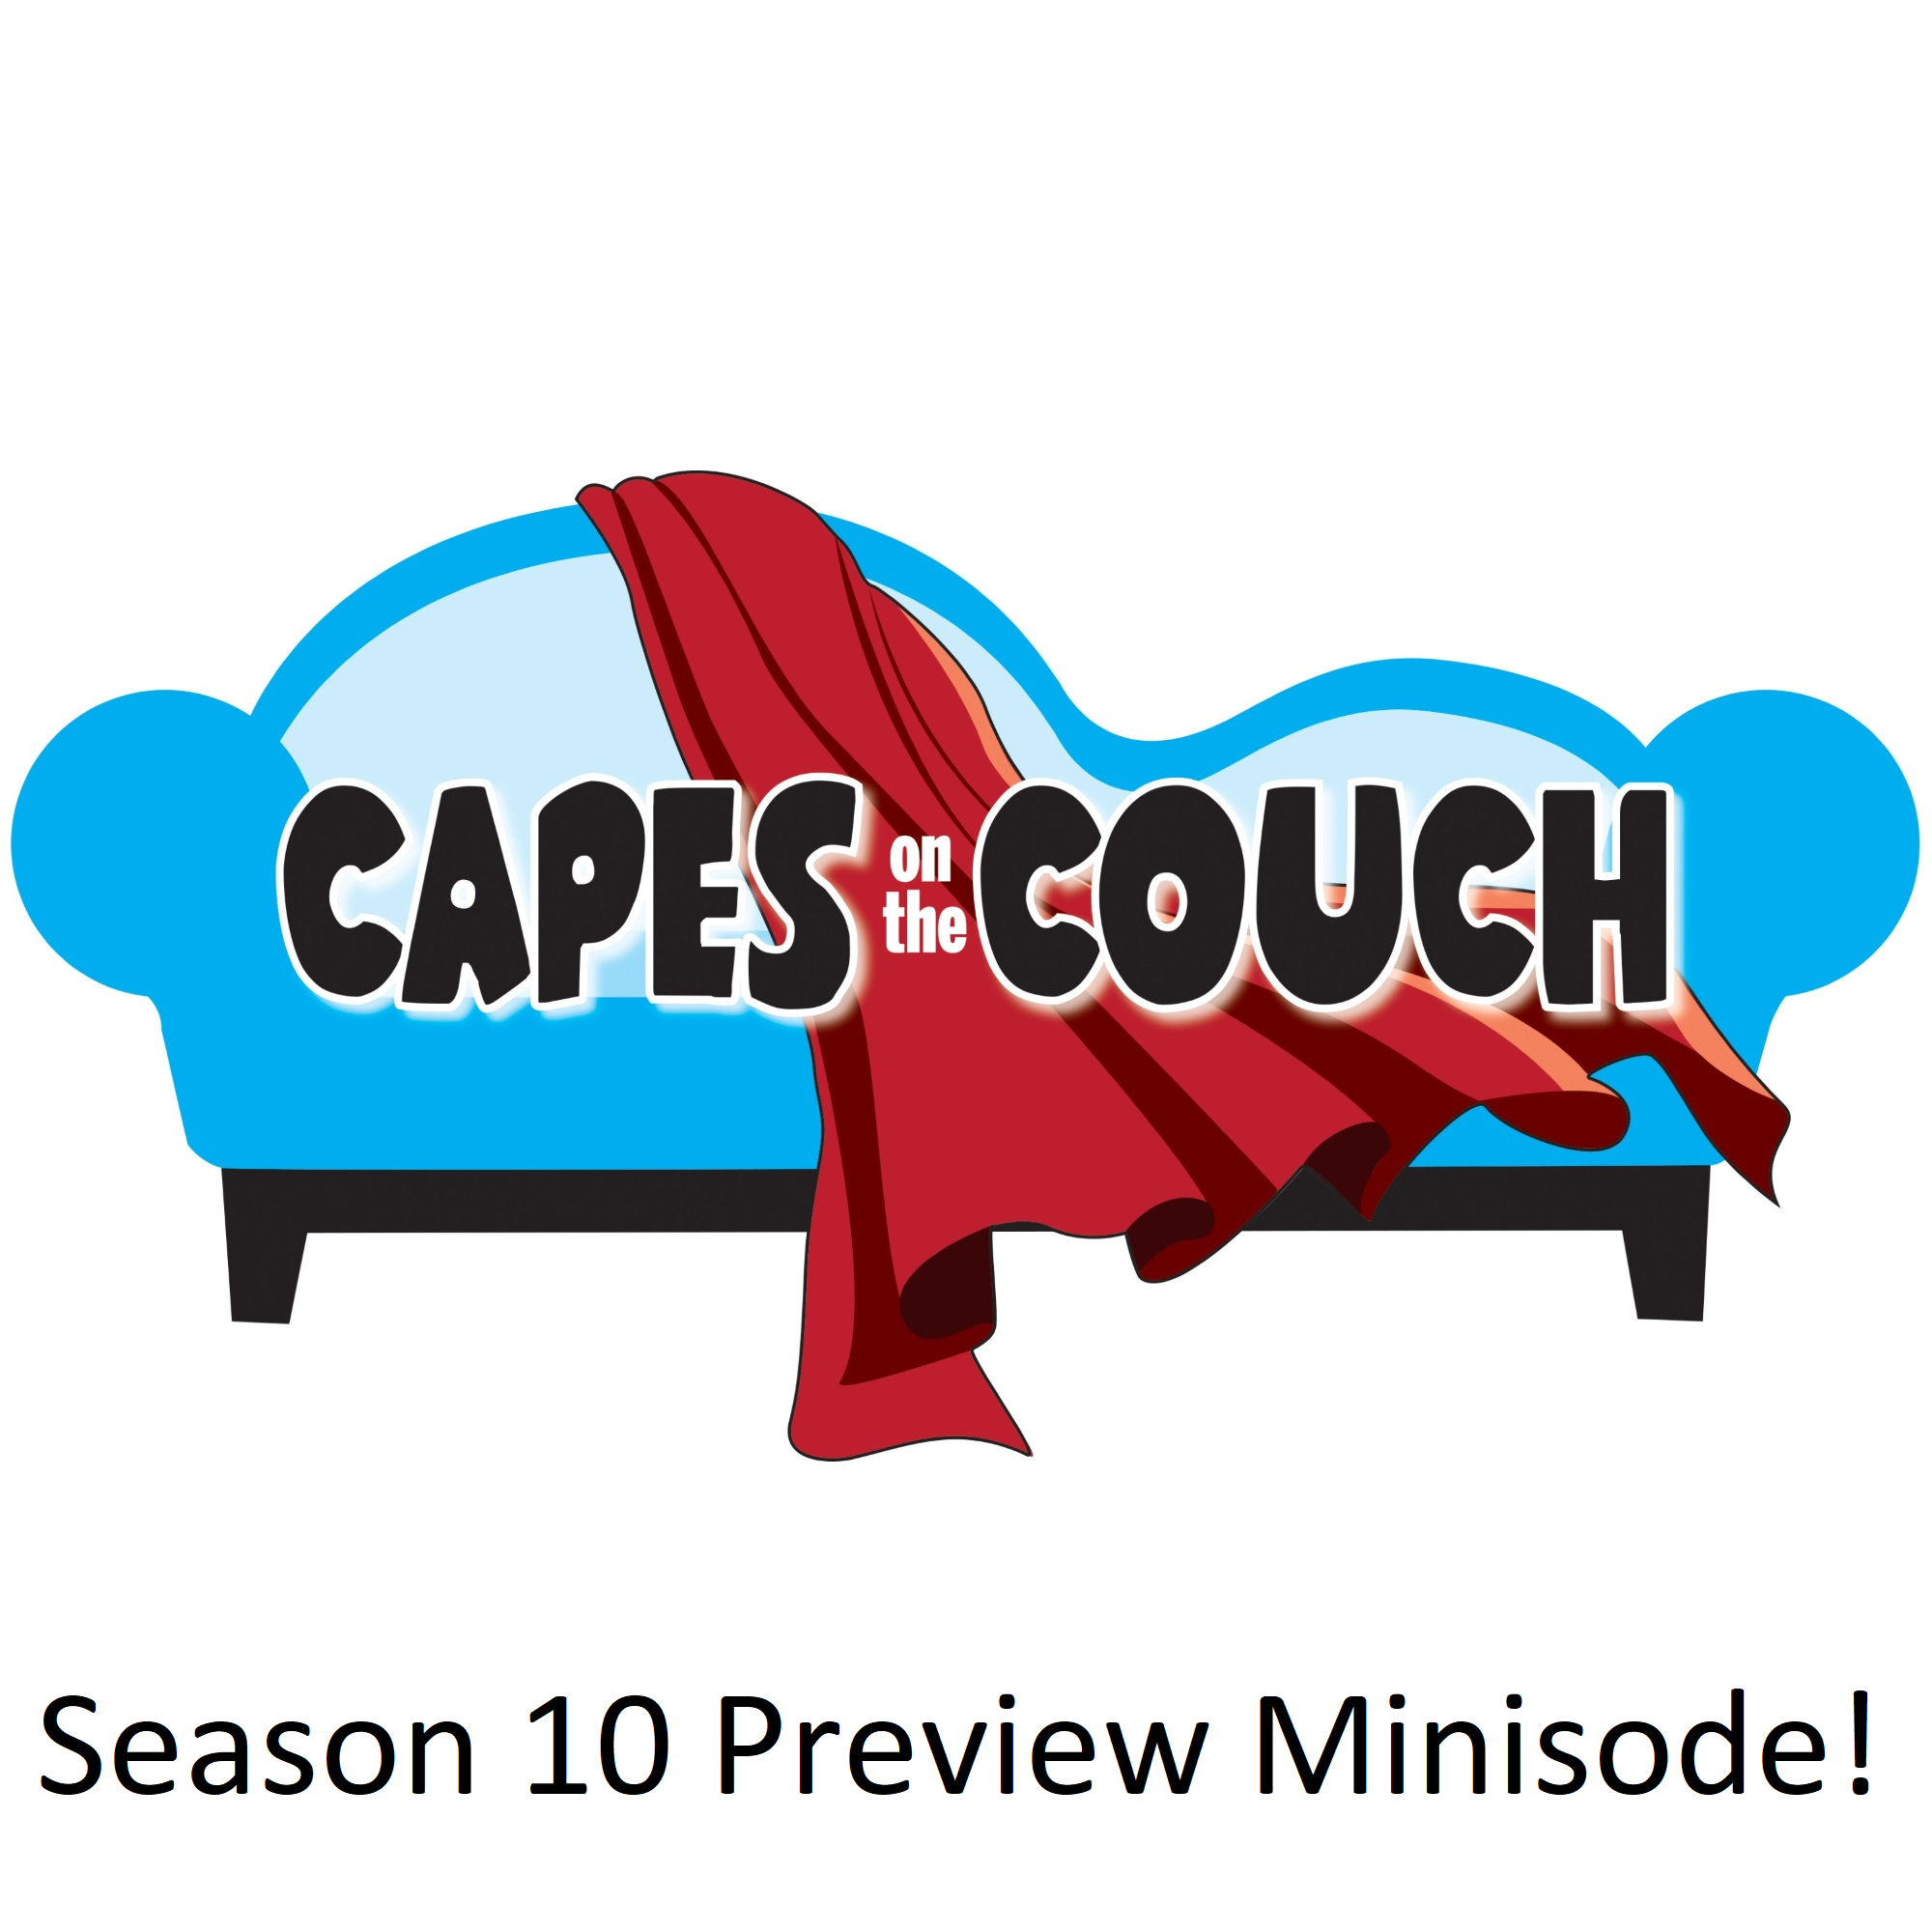 Season 10 Preview Minisode post thumbnail image